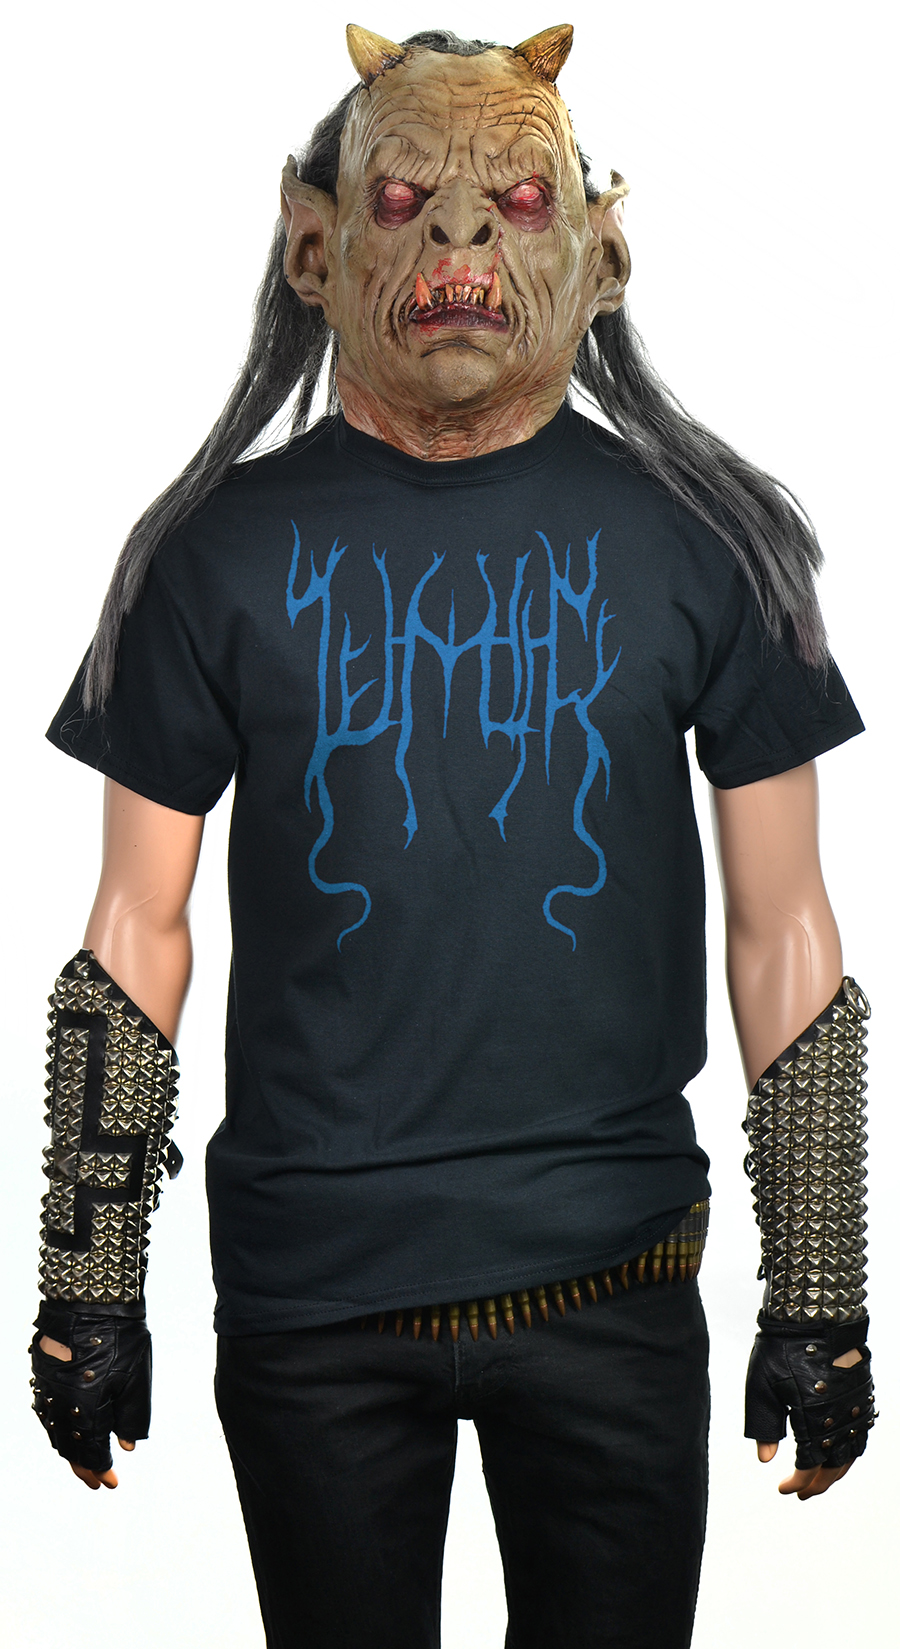 YMIR - Pagan Black Metal